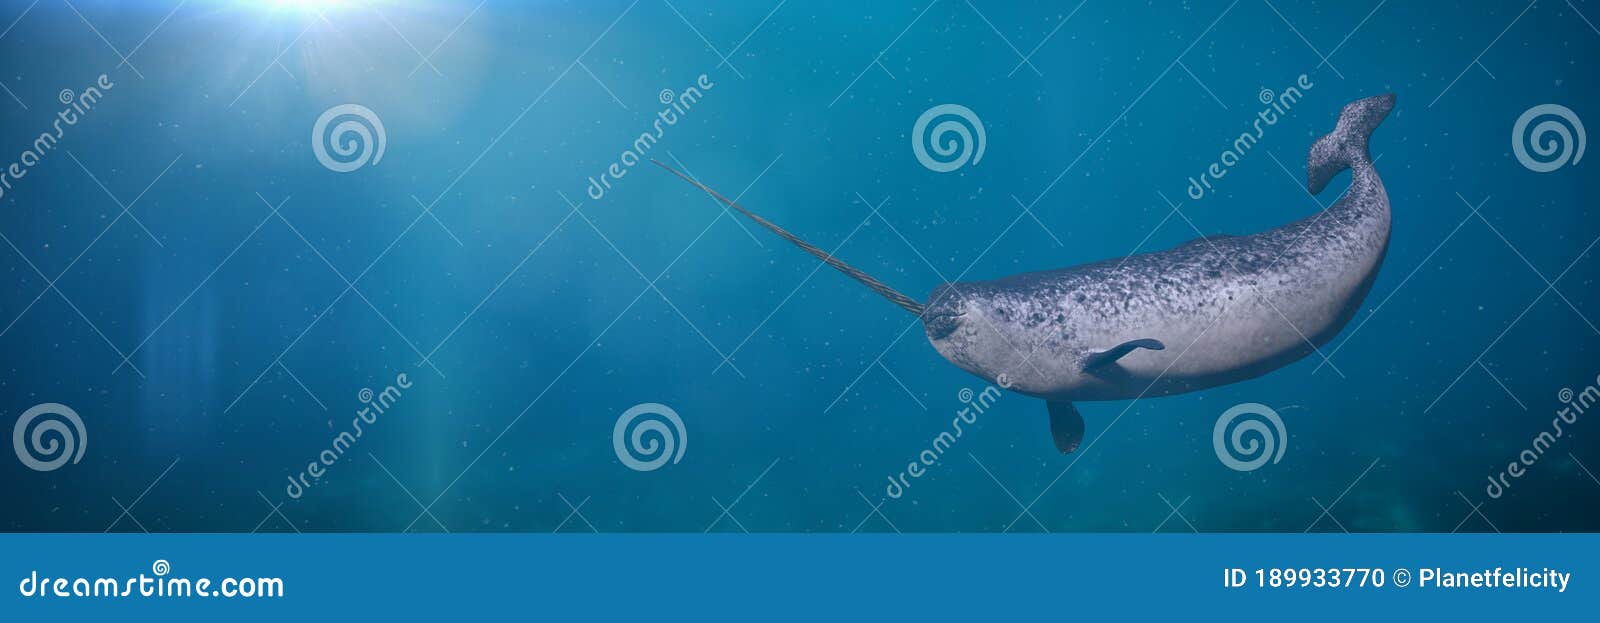 narwhal, male monodon monoceros swimming in the ocean water